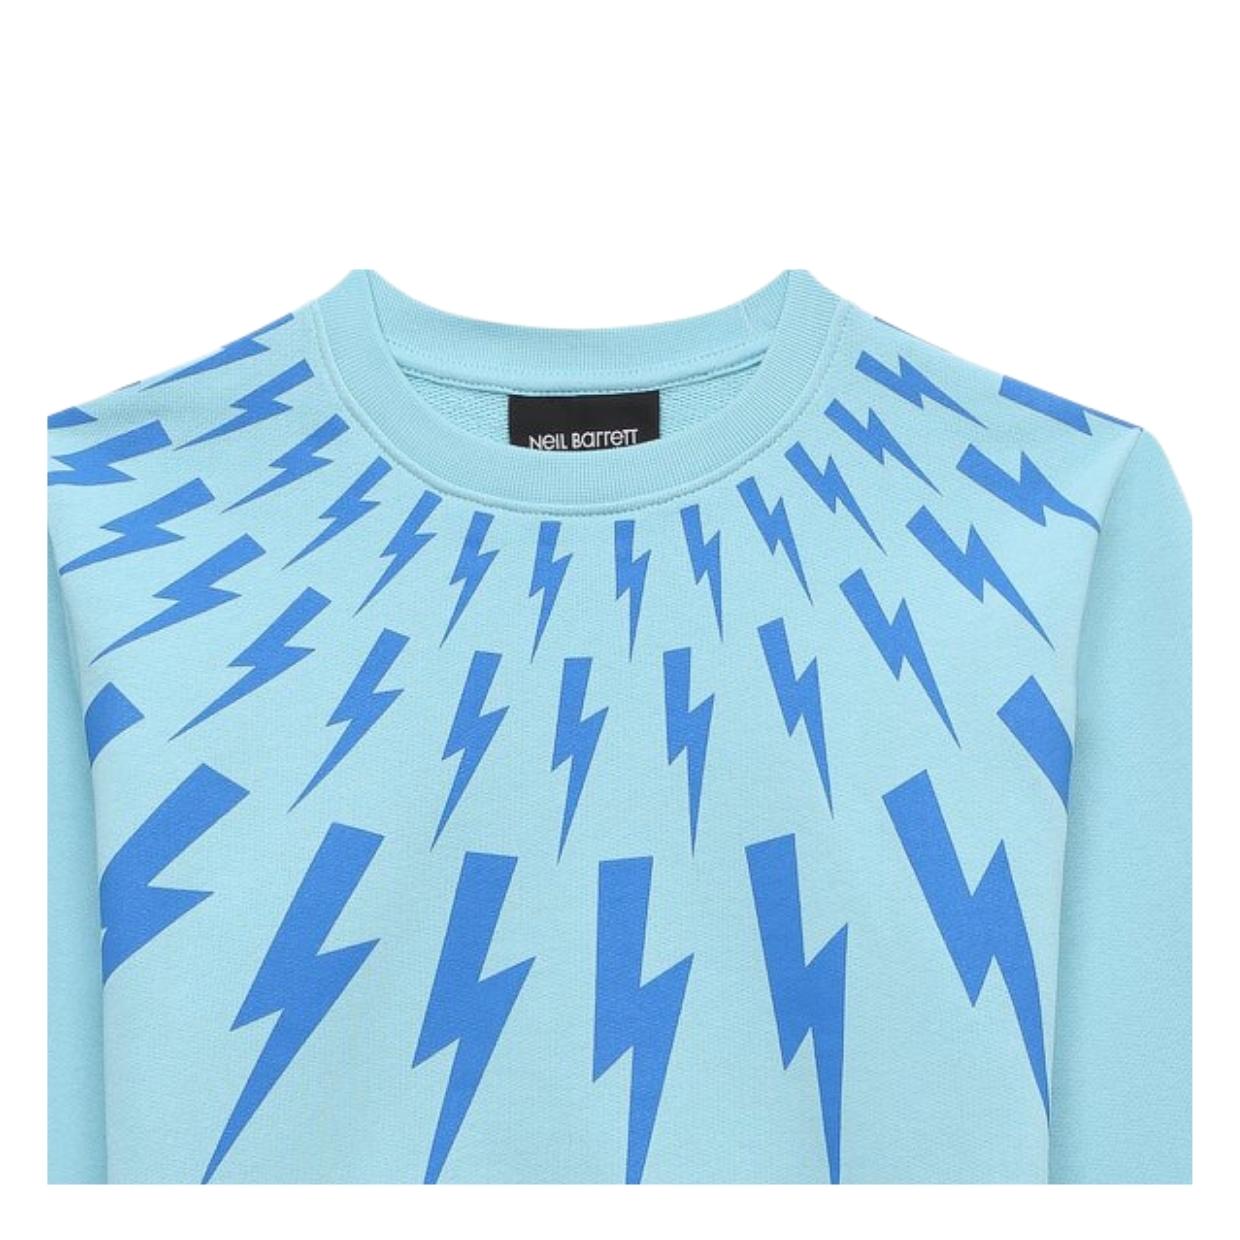 Neil Barrett Kids Printed Iconic Thunderbolt Logo Aqua Sweatshirt